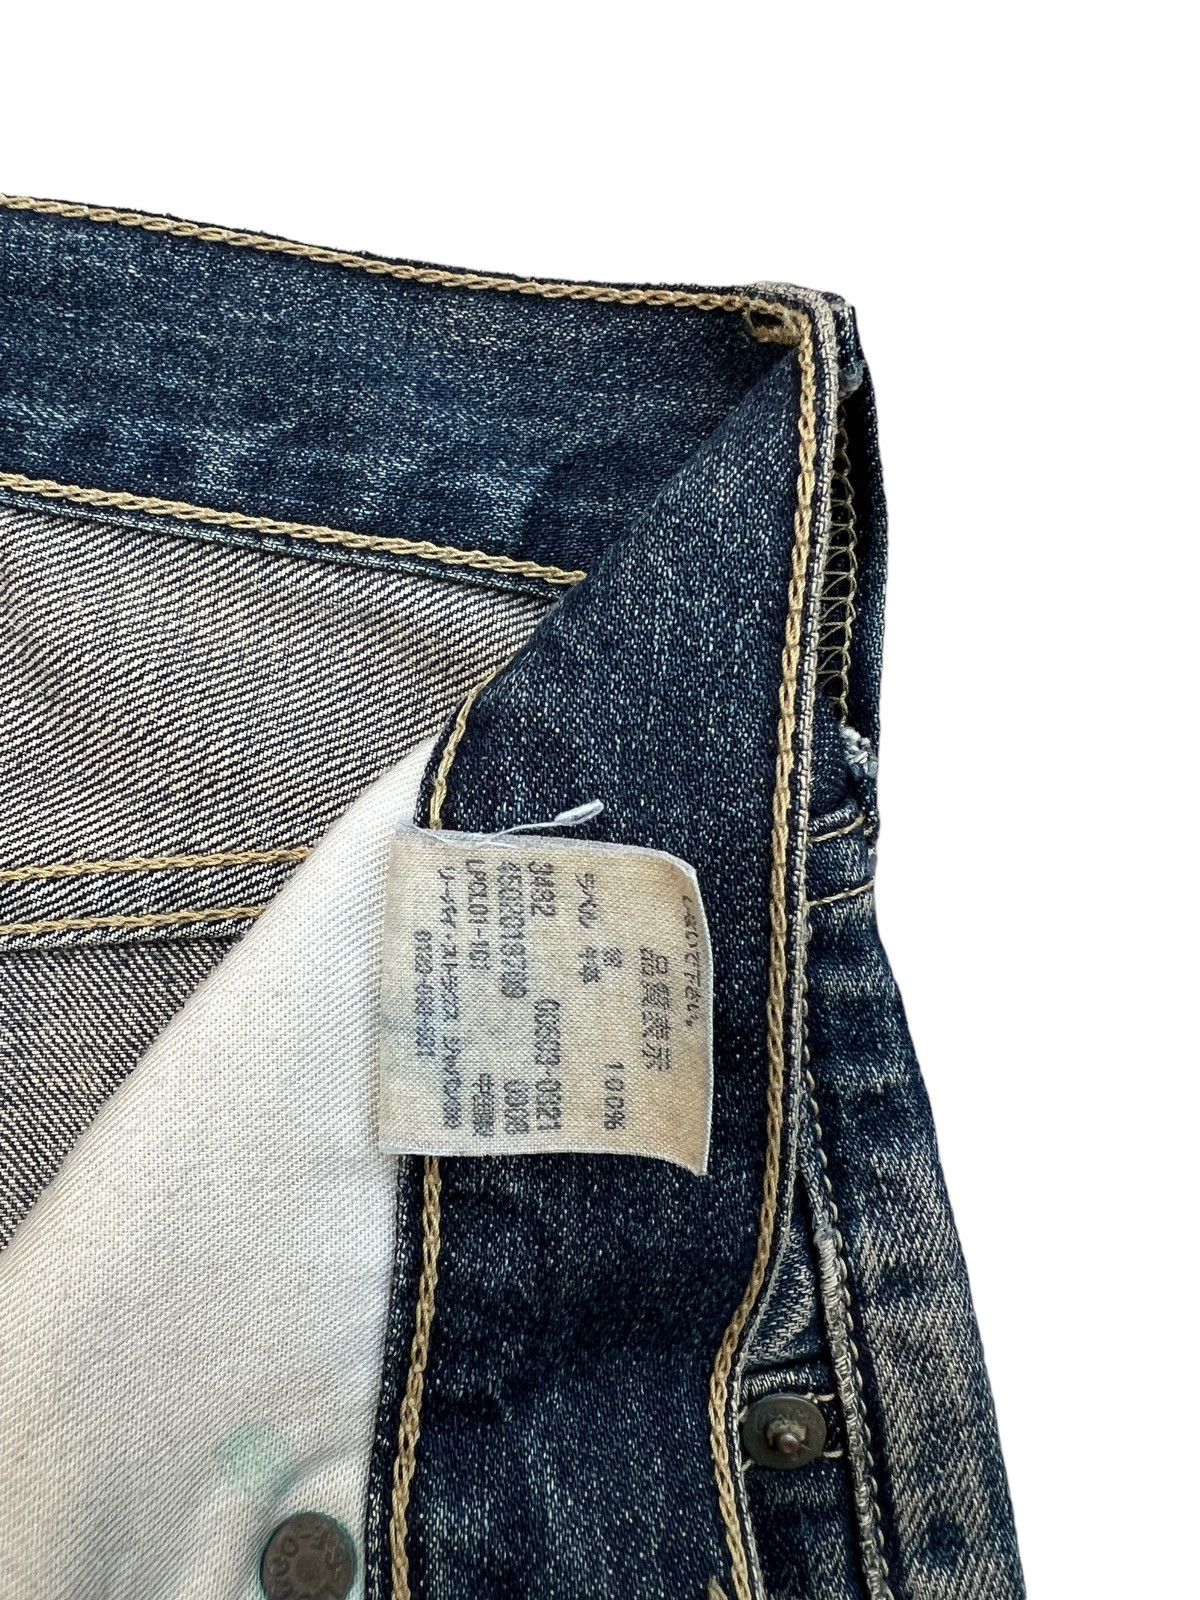 Vintage Levi’s 503 Distressed Rusty Denim Jeans 30x32 - 16